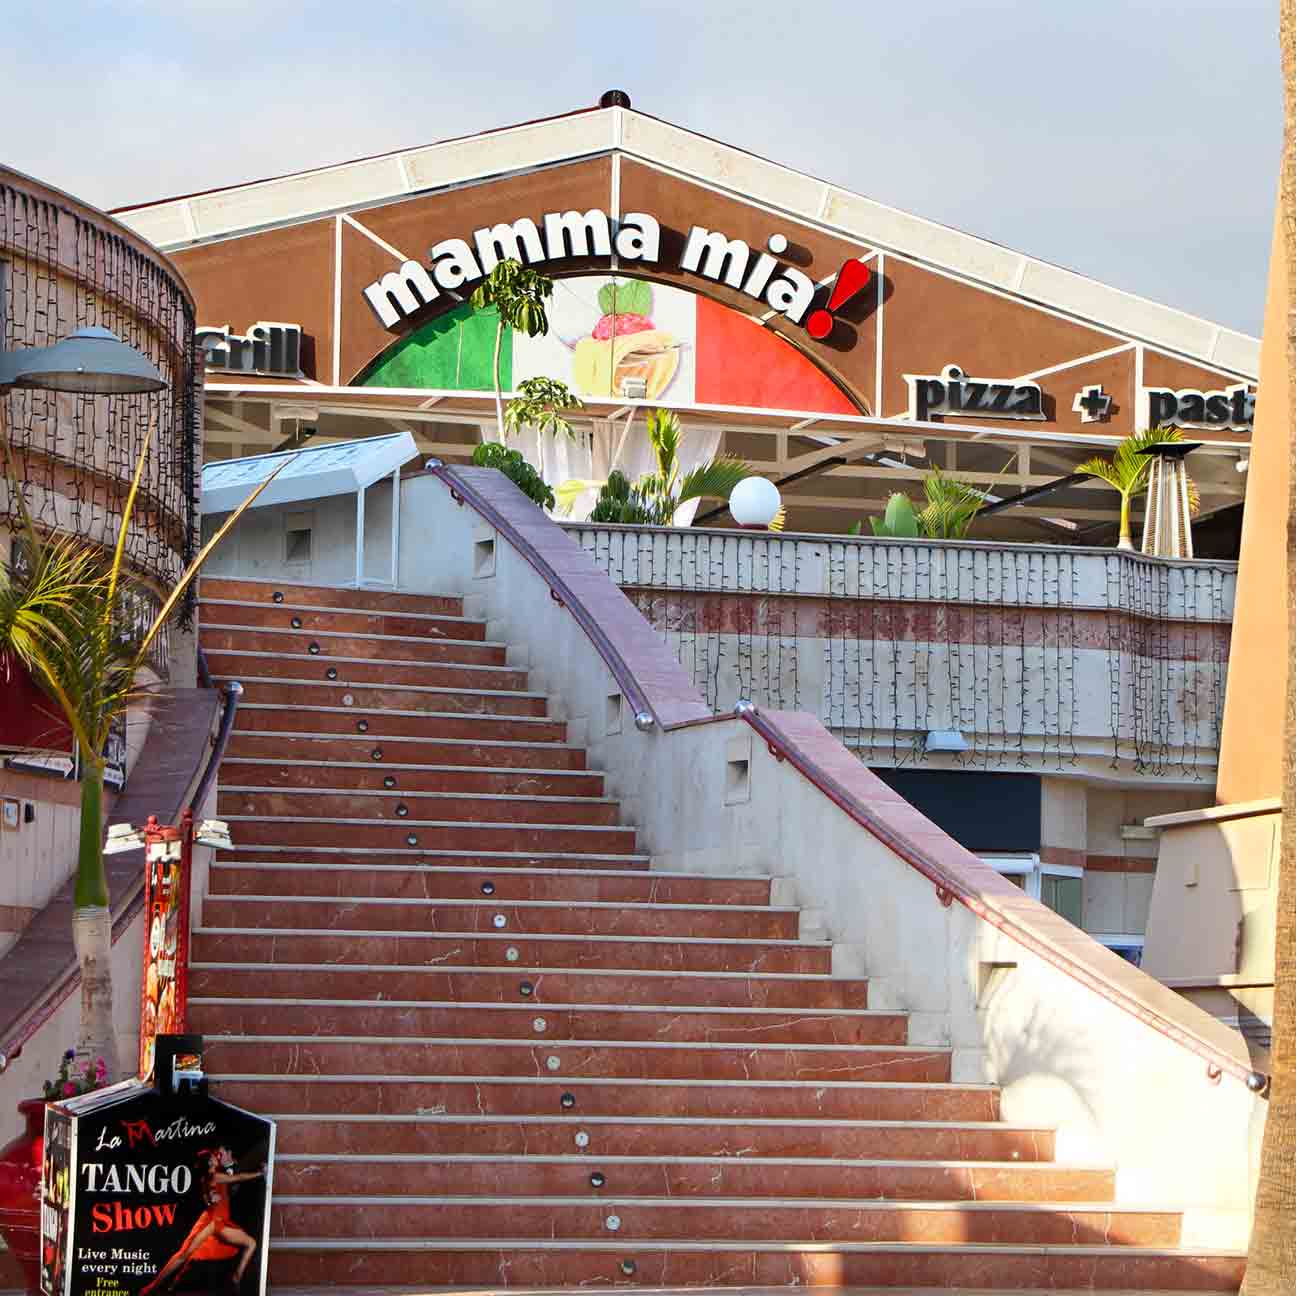 Restaurante Mamma mia donde comer en Tenerife